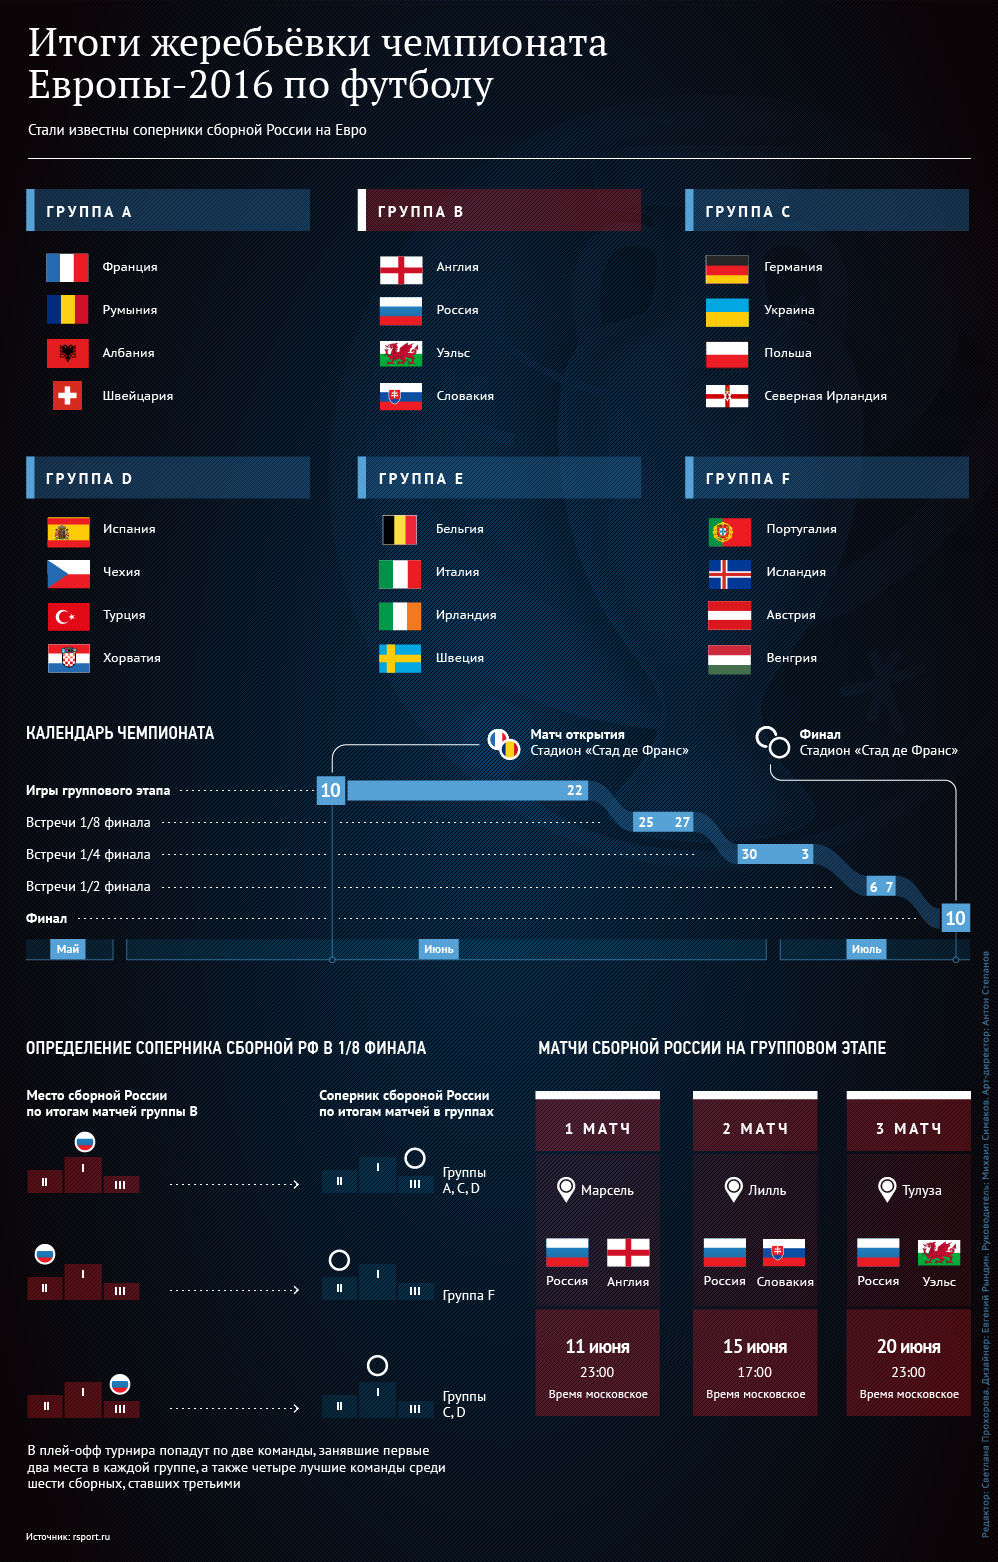 Итоги жеребьевки чемпионата Европы-2016 по футболу